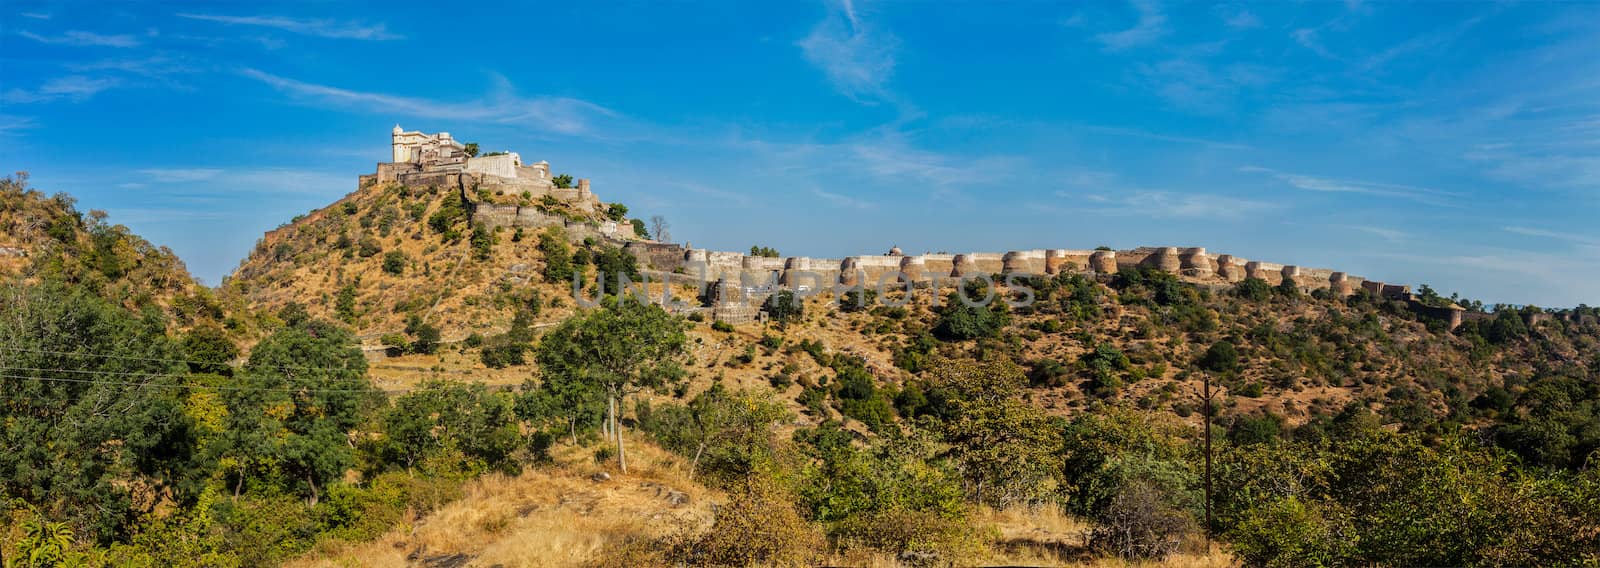 Panorama of Kumbhalgrh fort. Rajasthan, India by dimol